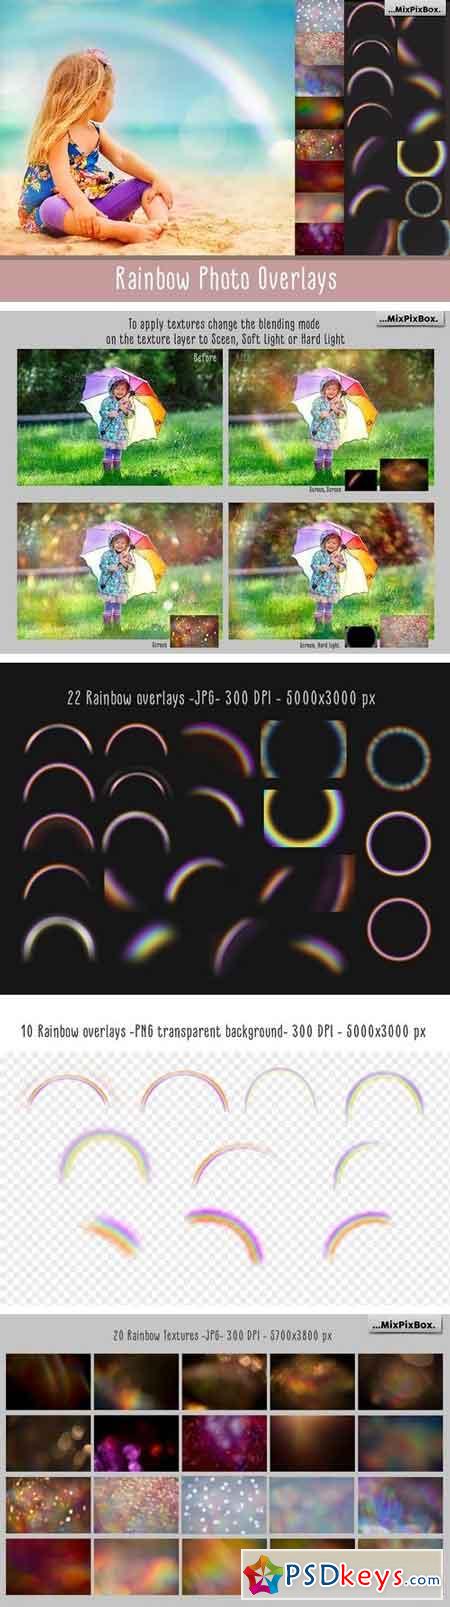 Rainbow overlays & textures 1659079